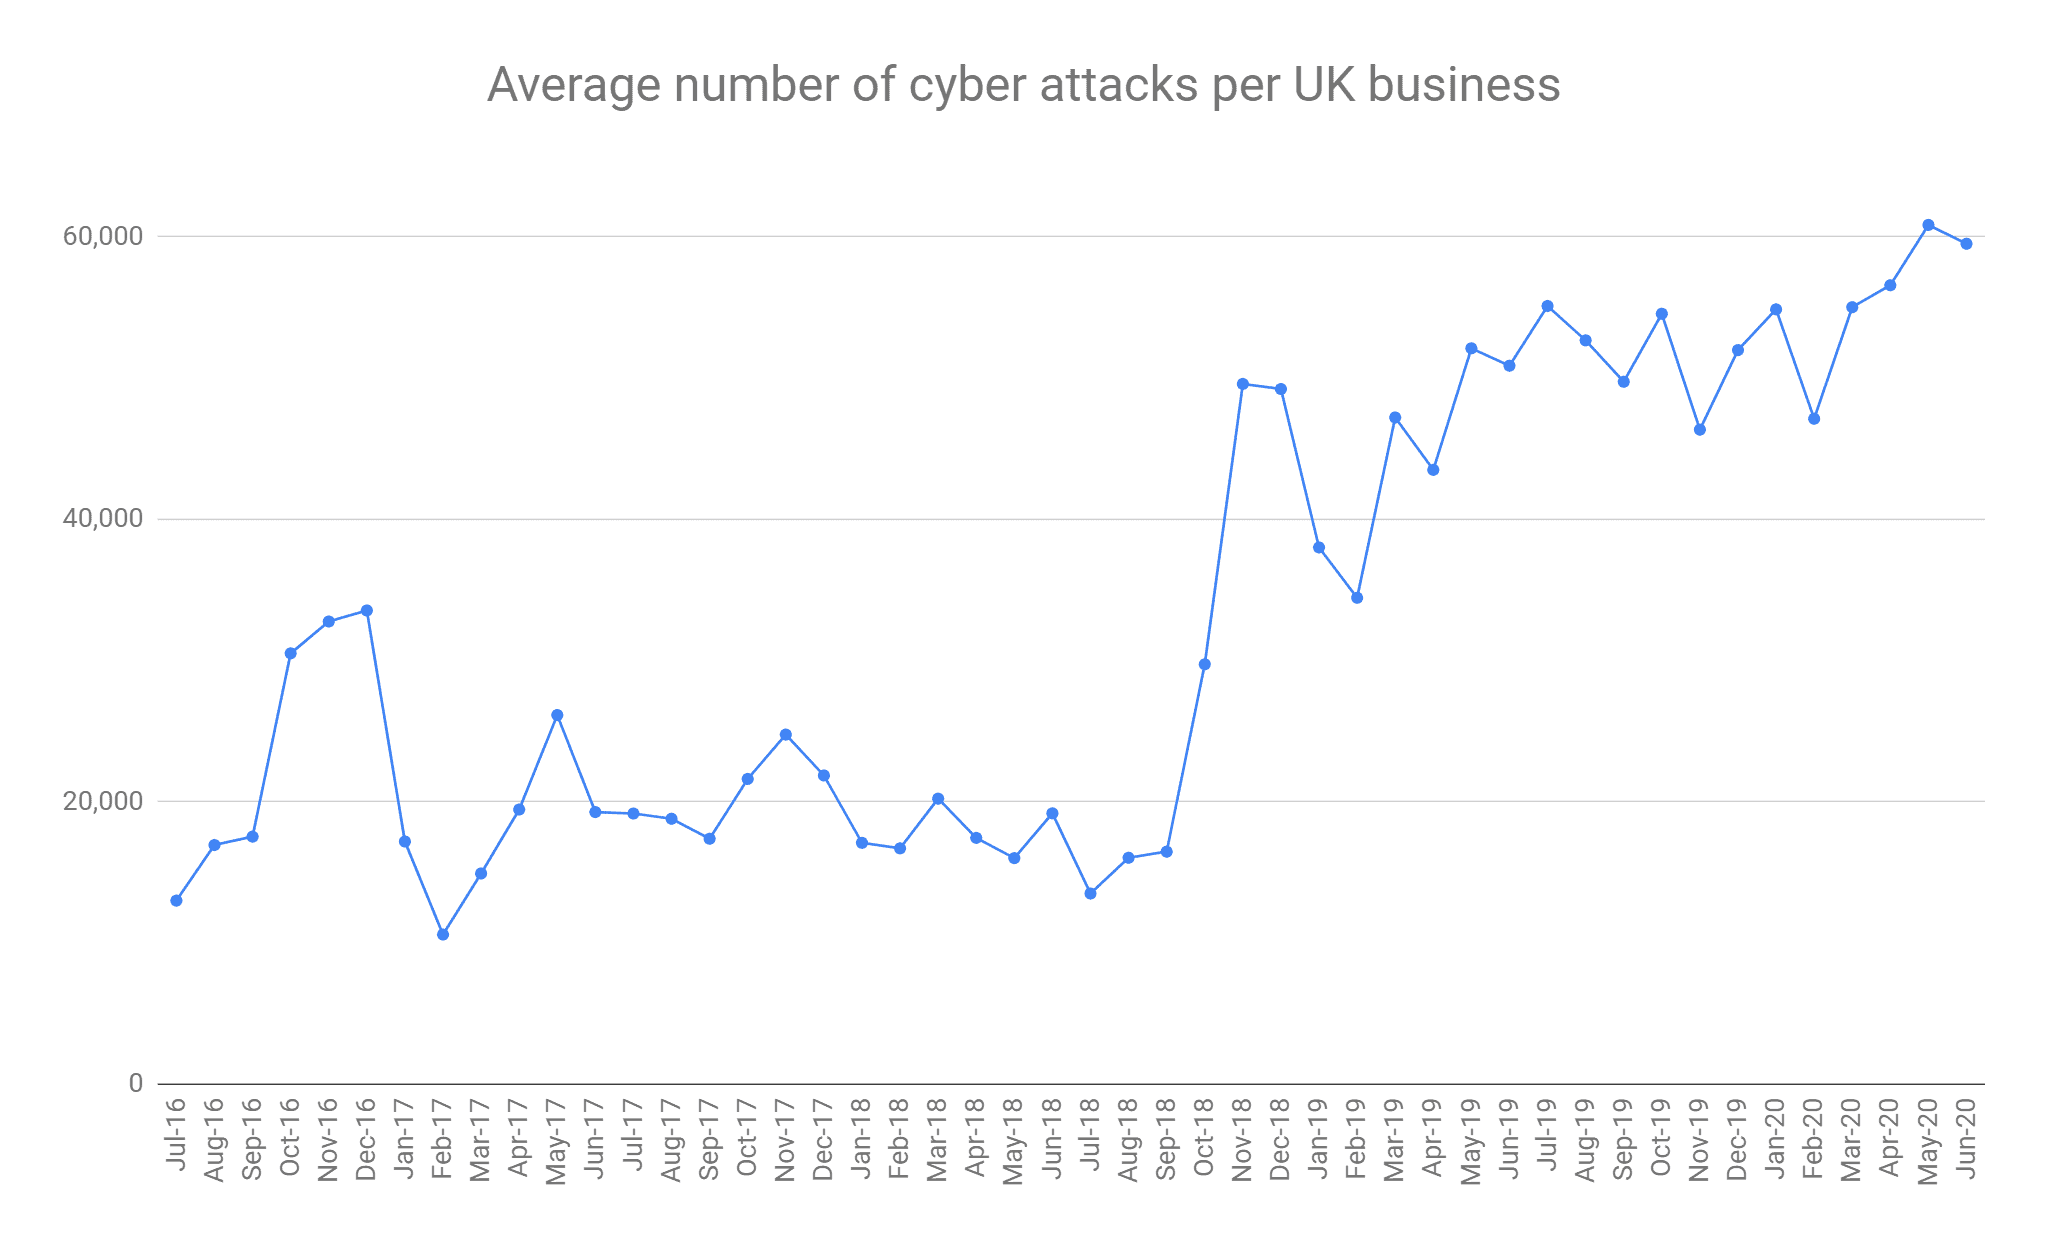 Average number of cyber attacks per UK business July 2016 - June 2020